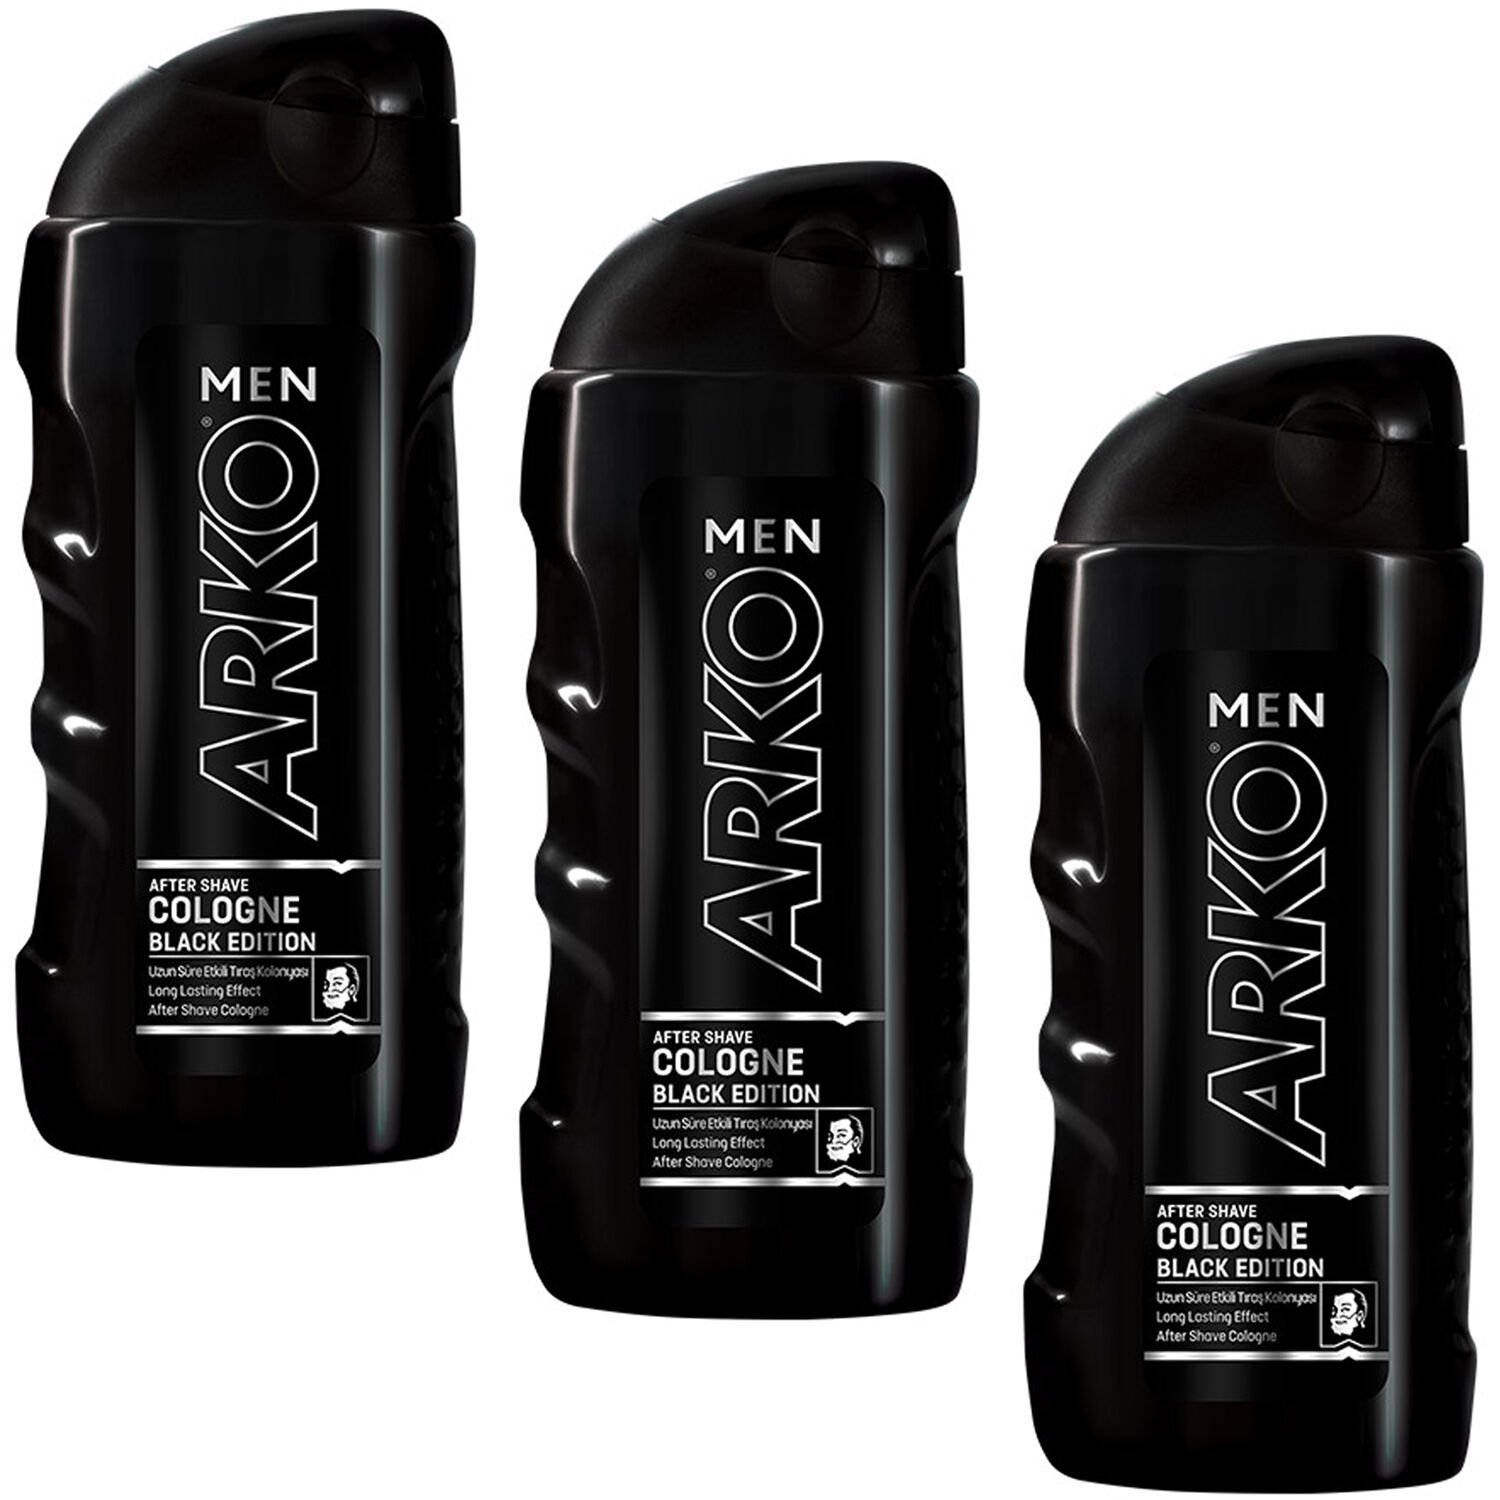 Arko Men Black Edition Tıraş Kolonyası 200 ml 3 ADET